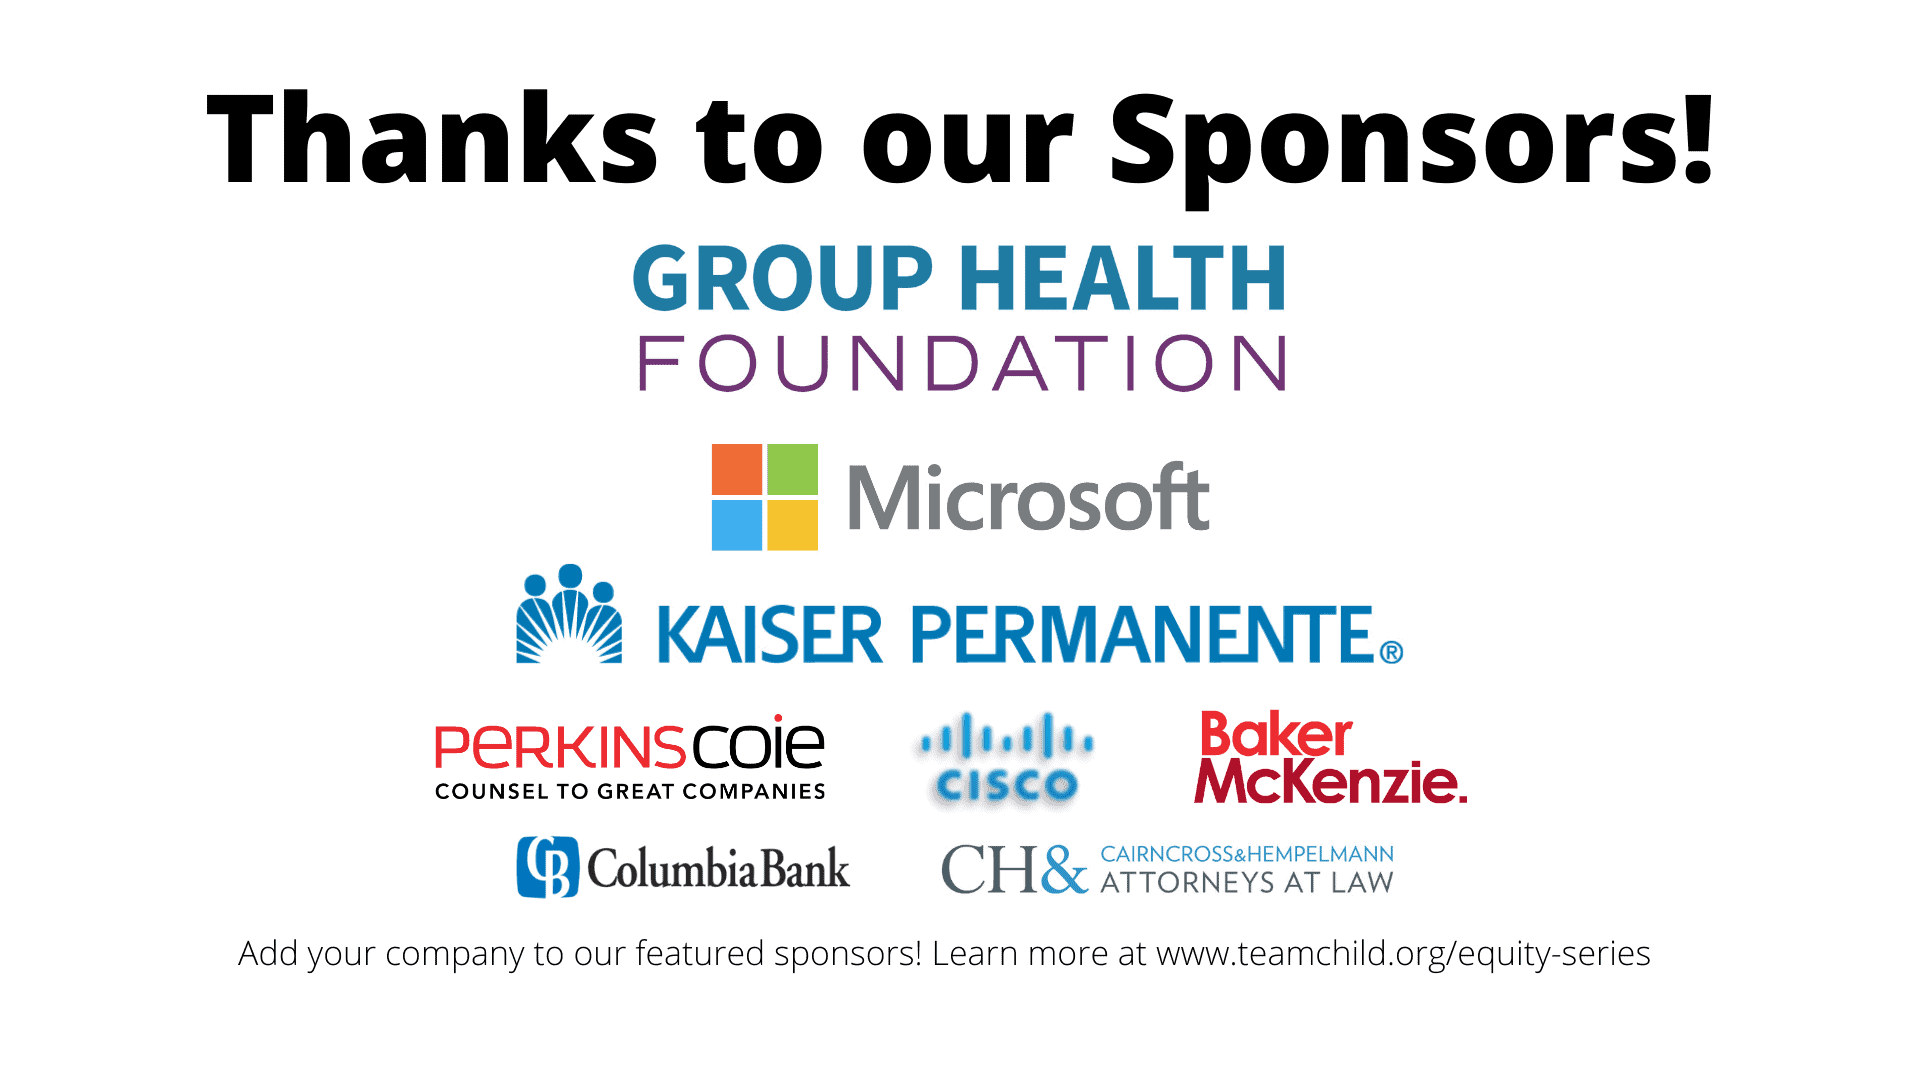 Color company logos for Group Health Foundation, Microsoft, Kaiser Permanente, PerkinsCoie, Cisco, Baker McKenzie, Columbia Bank and Cairncross & Hempelmann